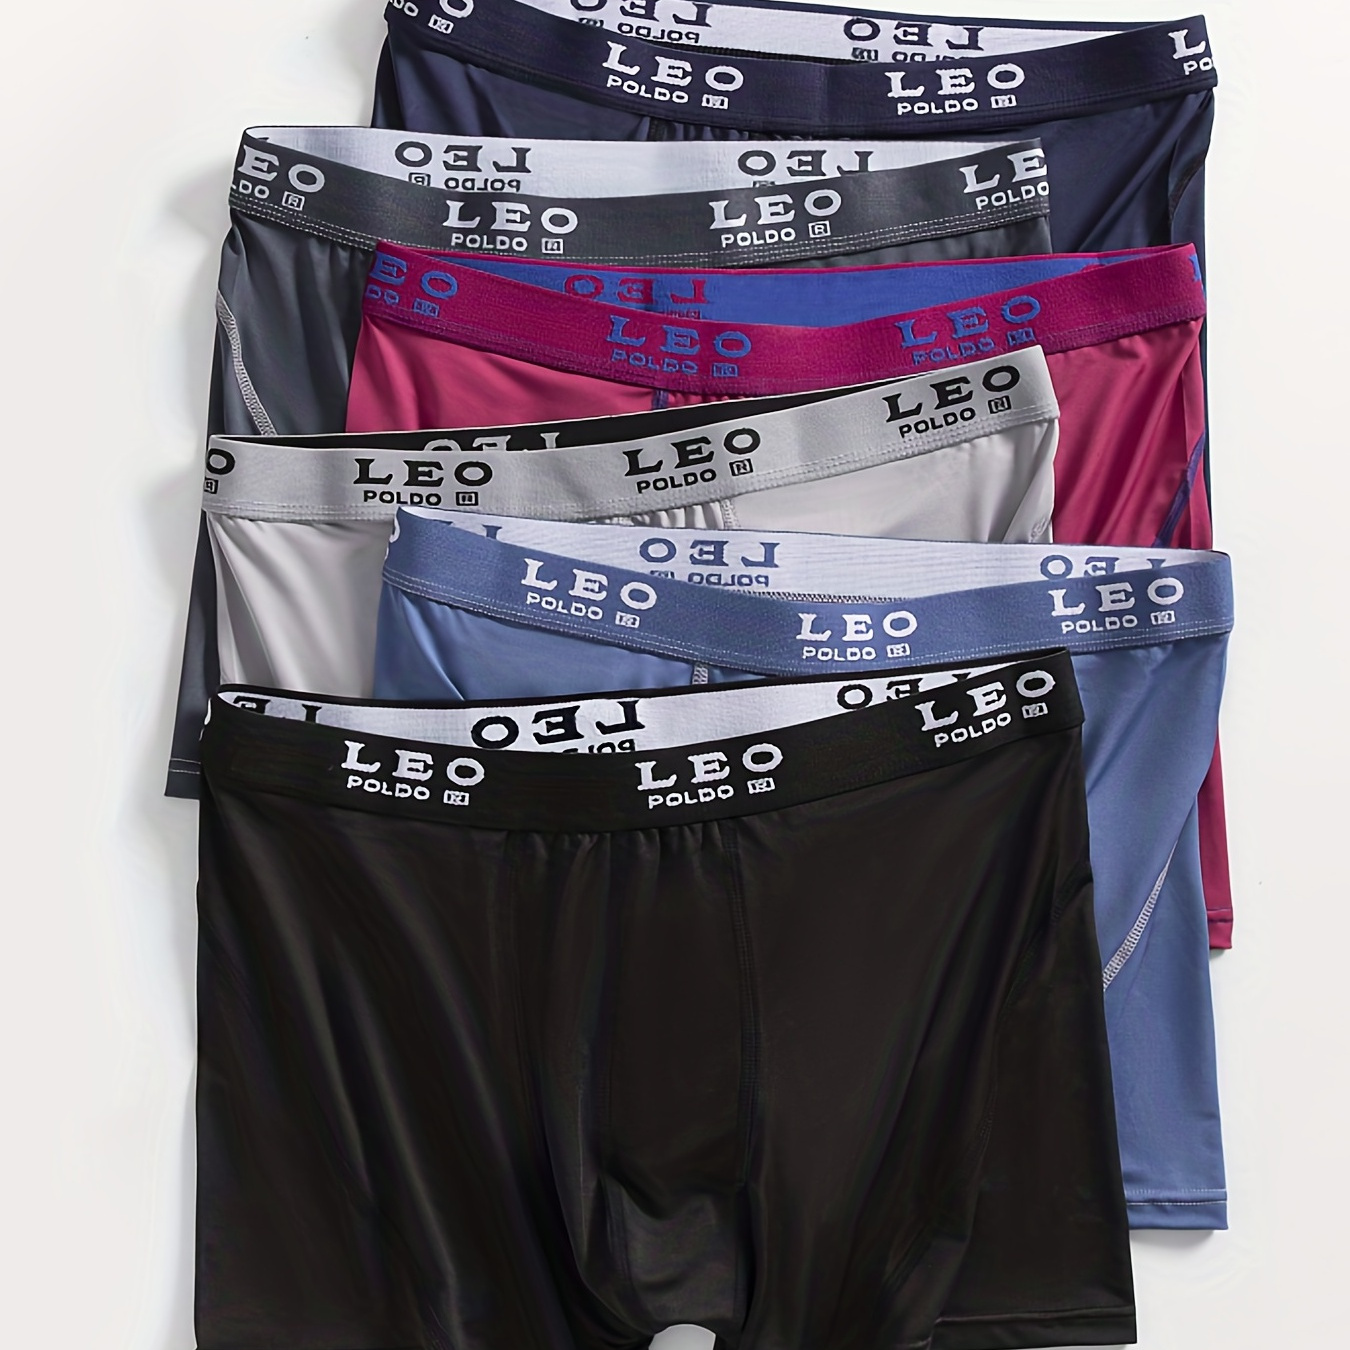 LEO POLDO 6pcs Men's Fashion Milk Silk Boxers Briefs, Breathable Soft Comfy  Stretchy Skin-friendly Underwear